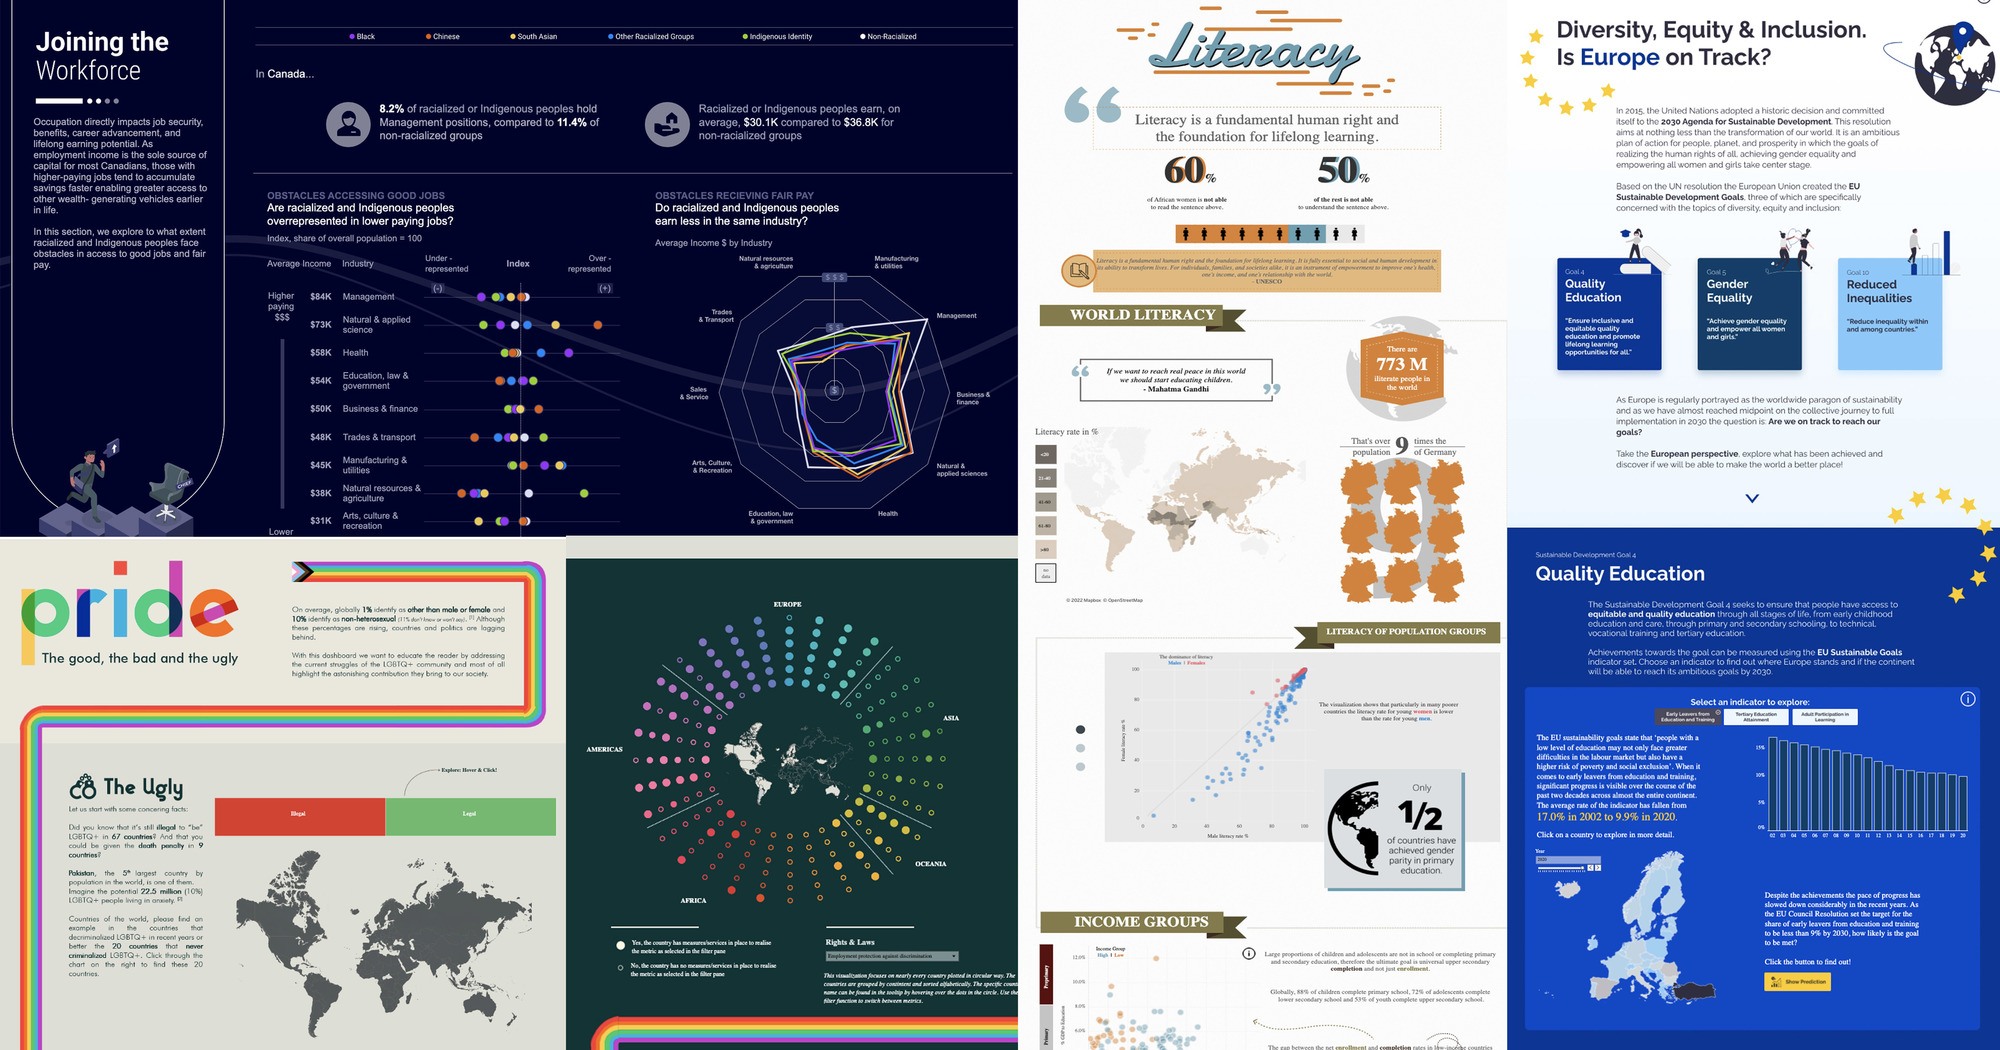 Deloitte Data Viz visualization finalists 2022